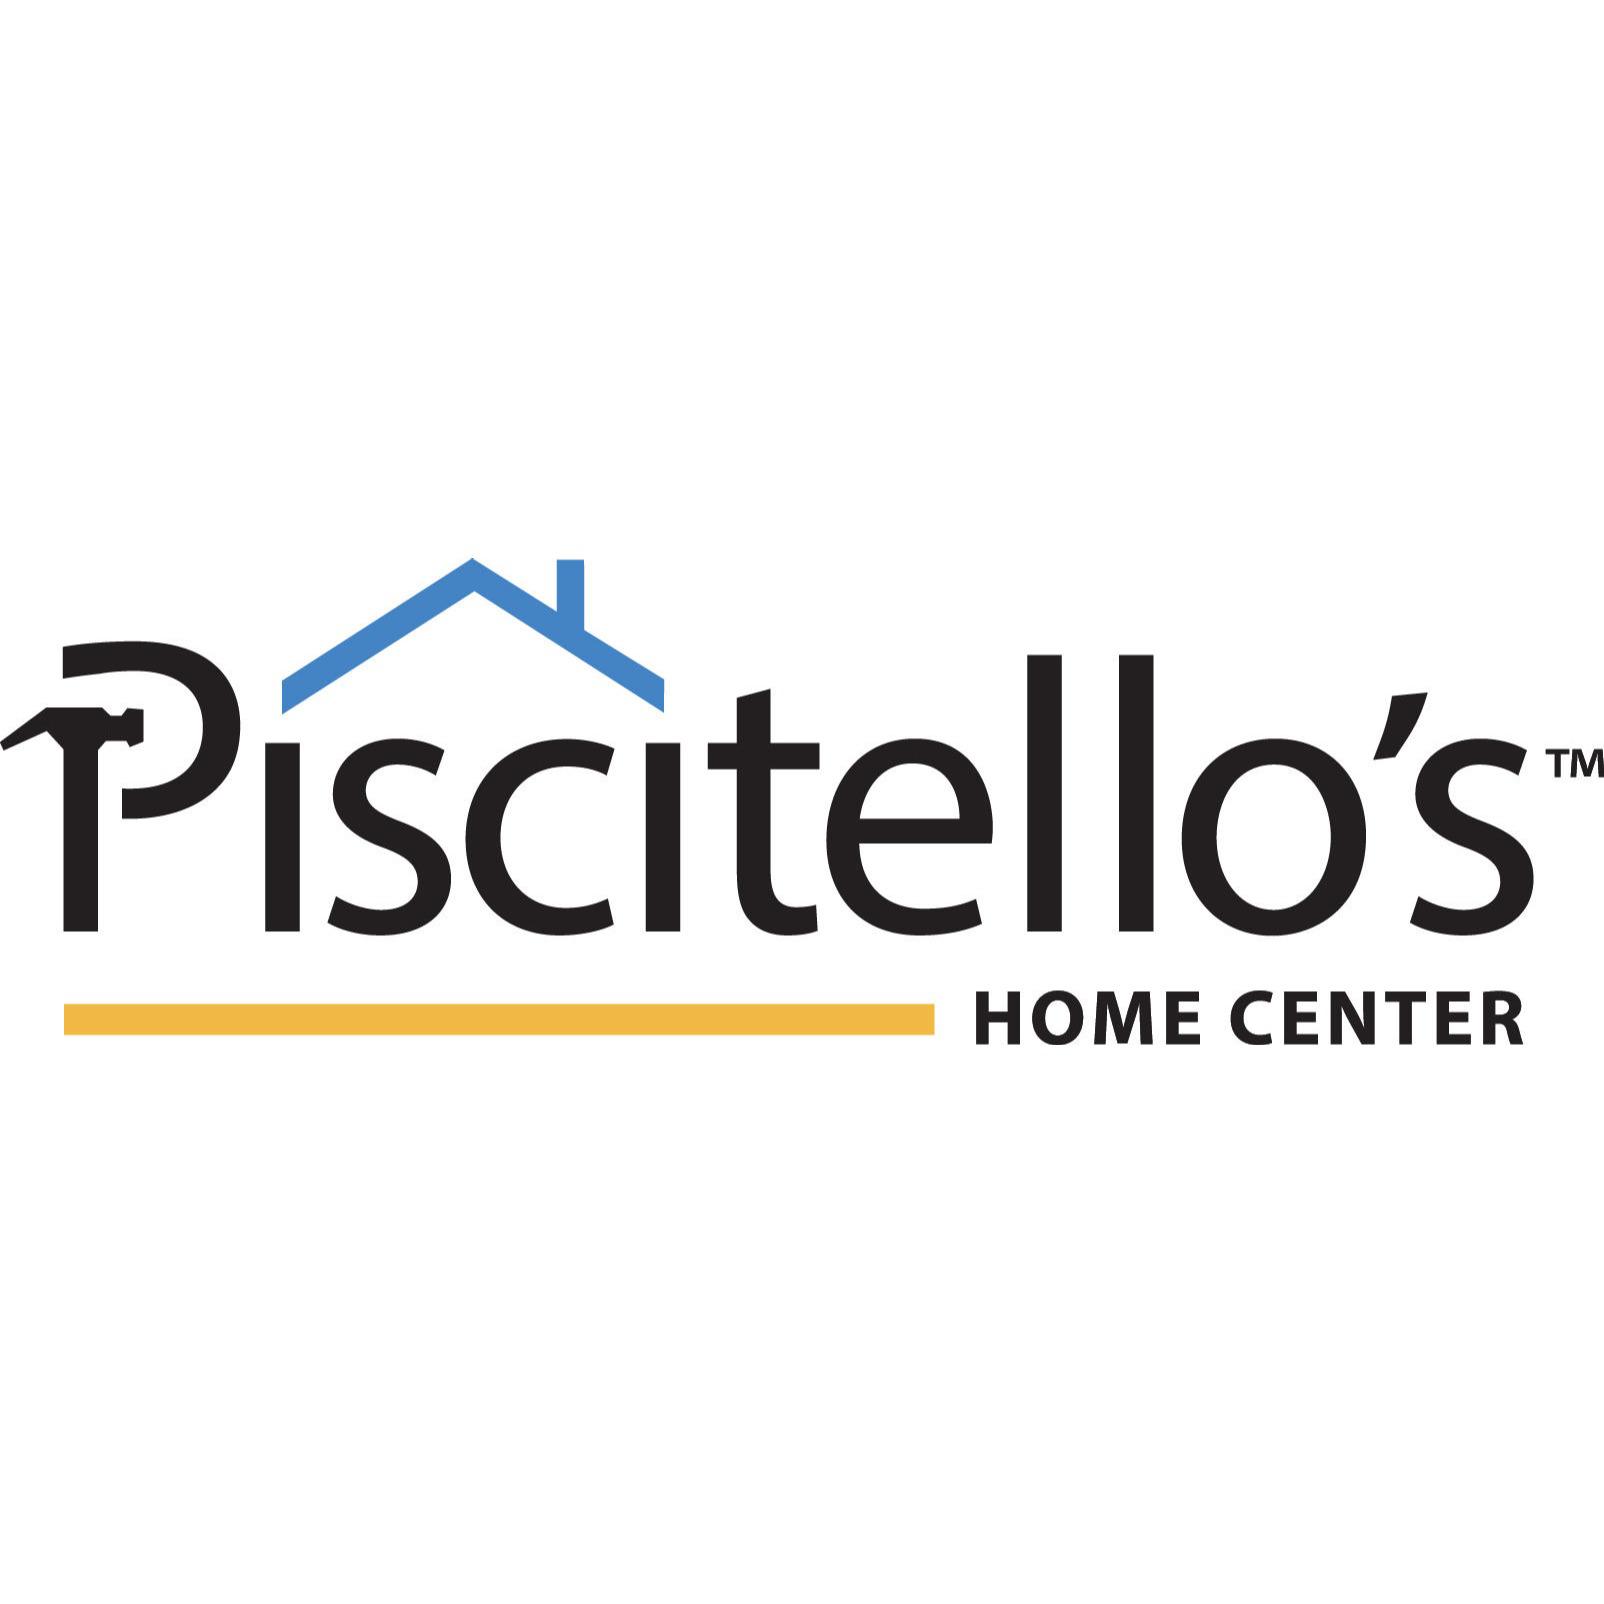 Piscitello's Home Center - Easton, PA 18042 - (610)258-0441 | ShowMeLocal.com